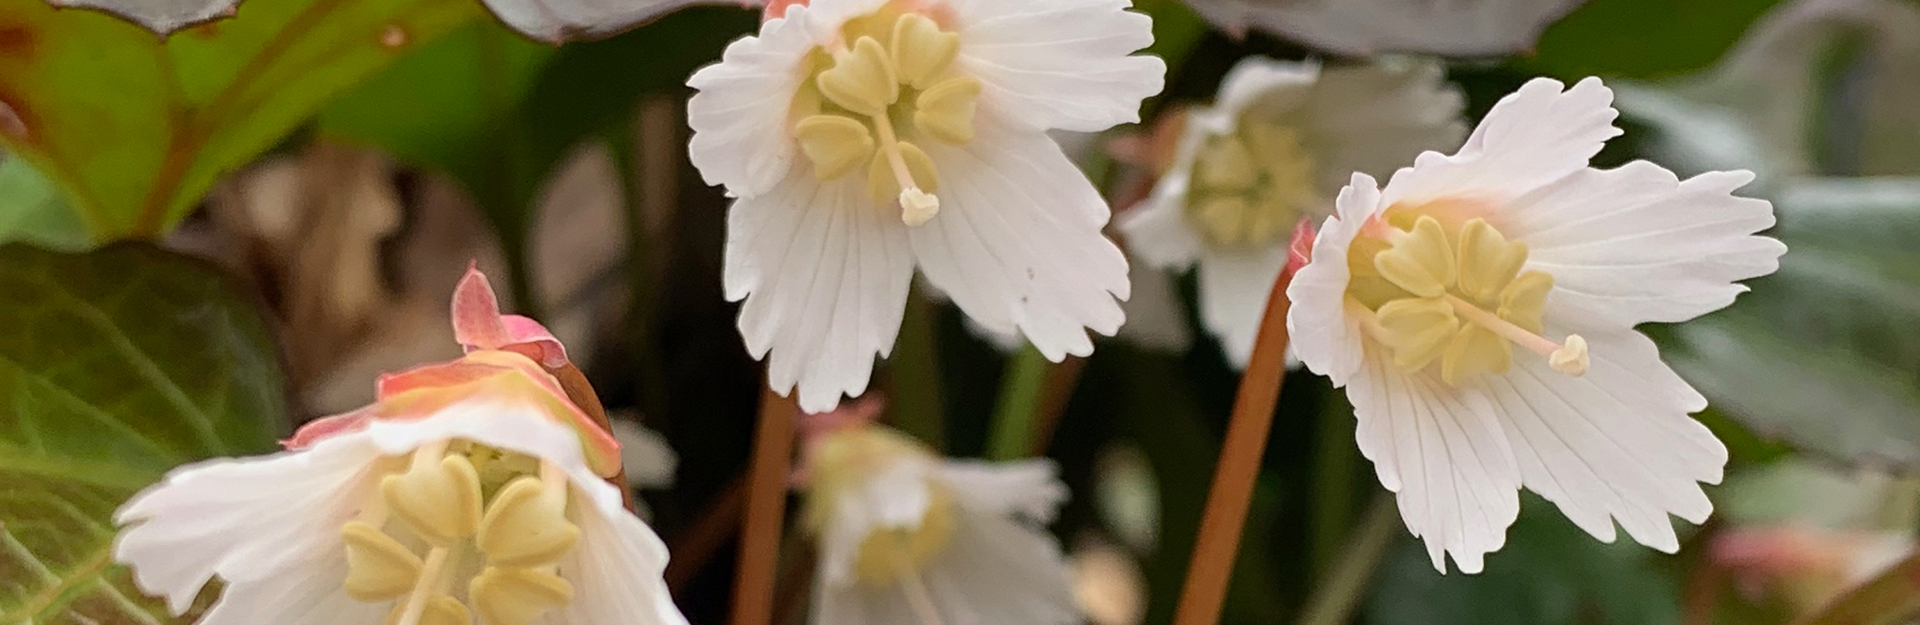 oconee bell blooms close up